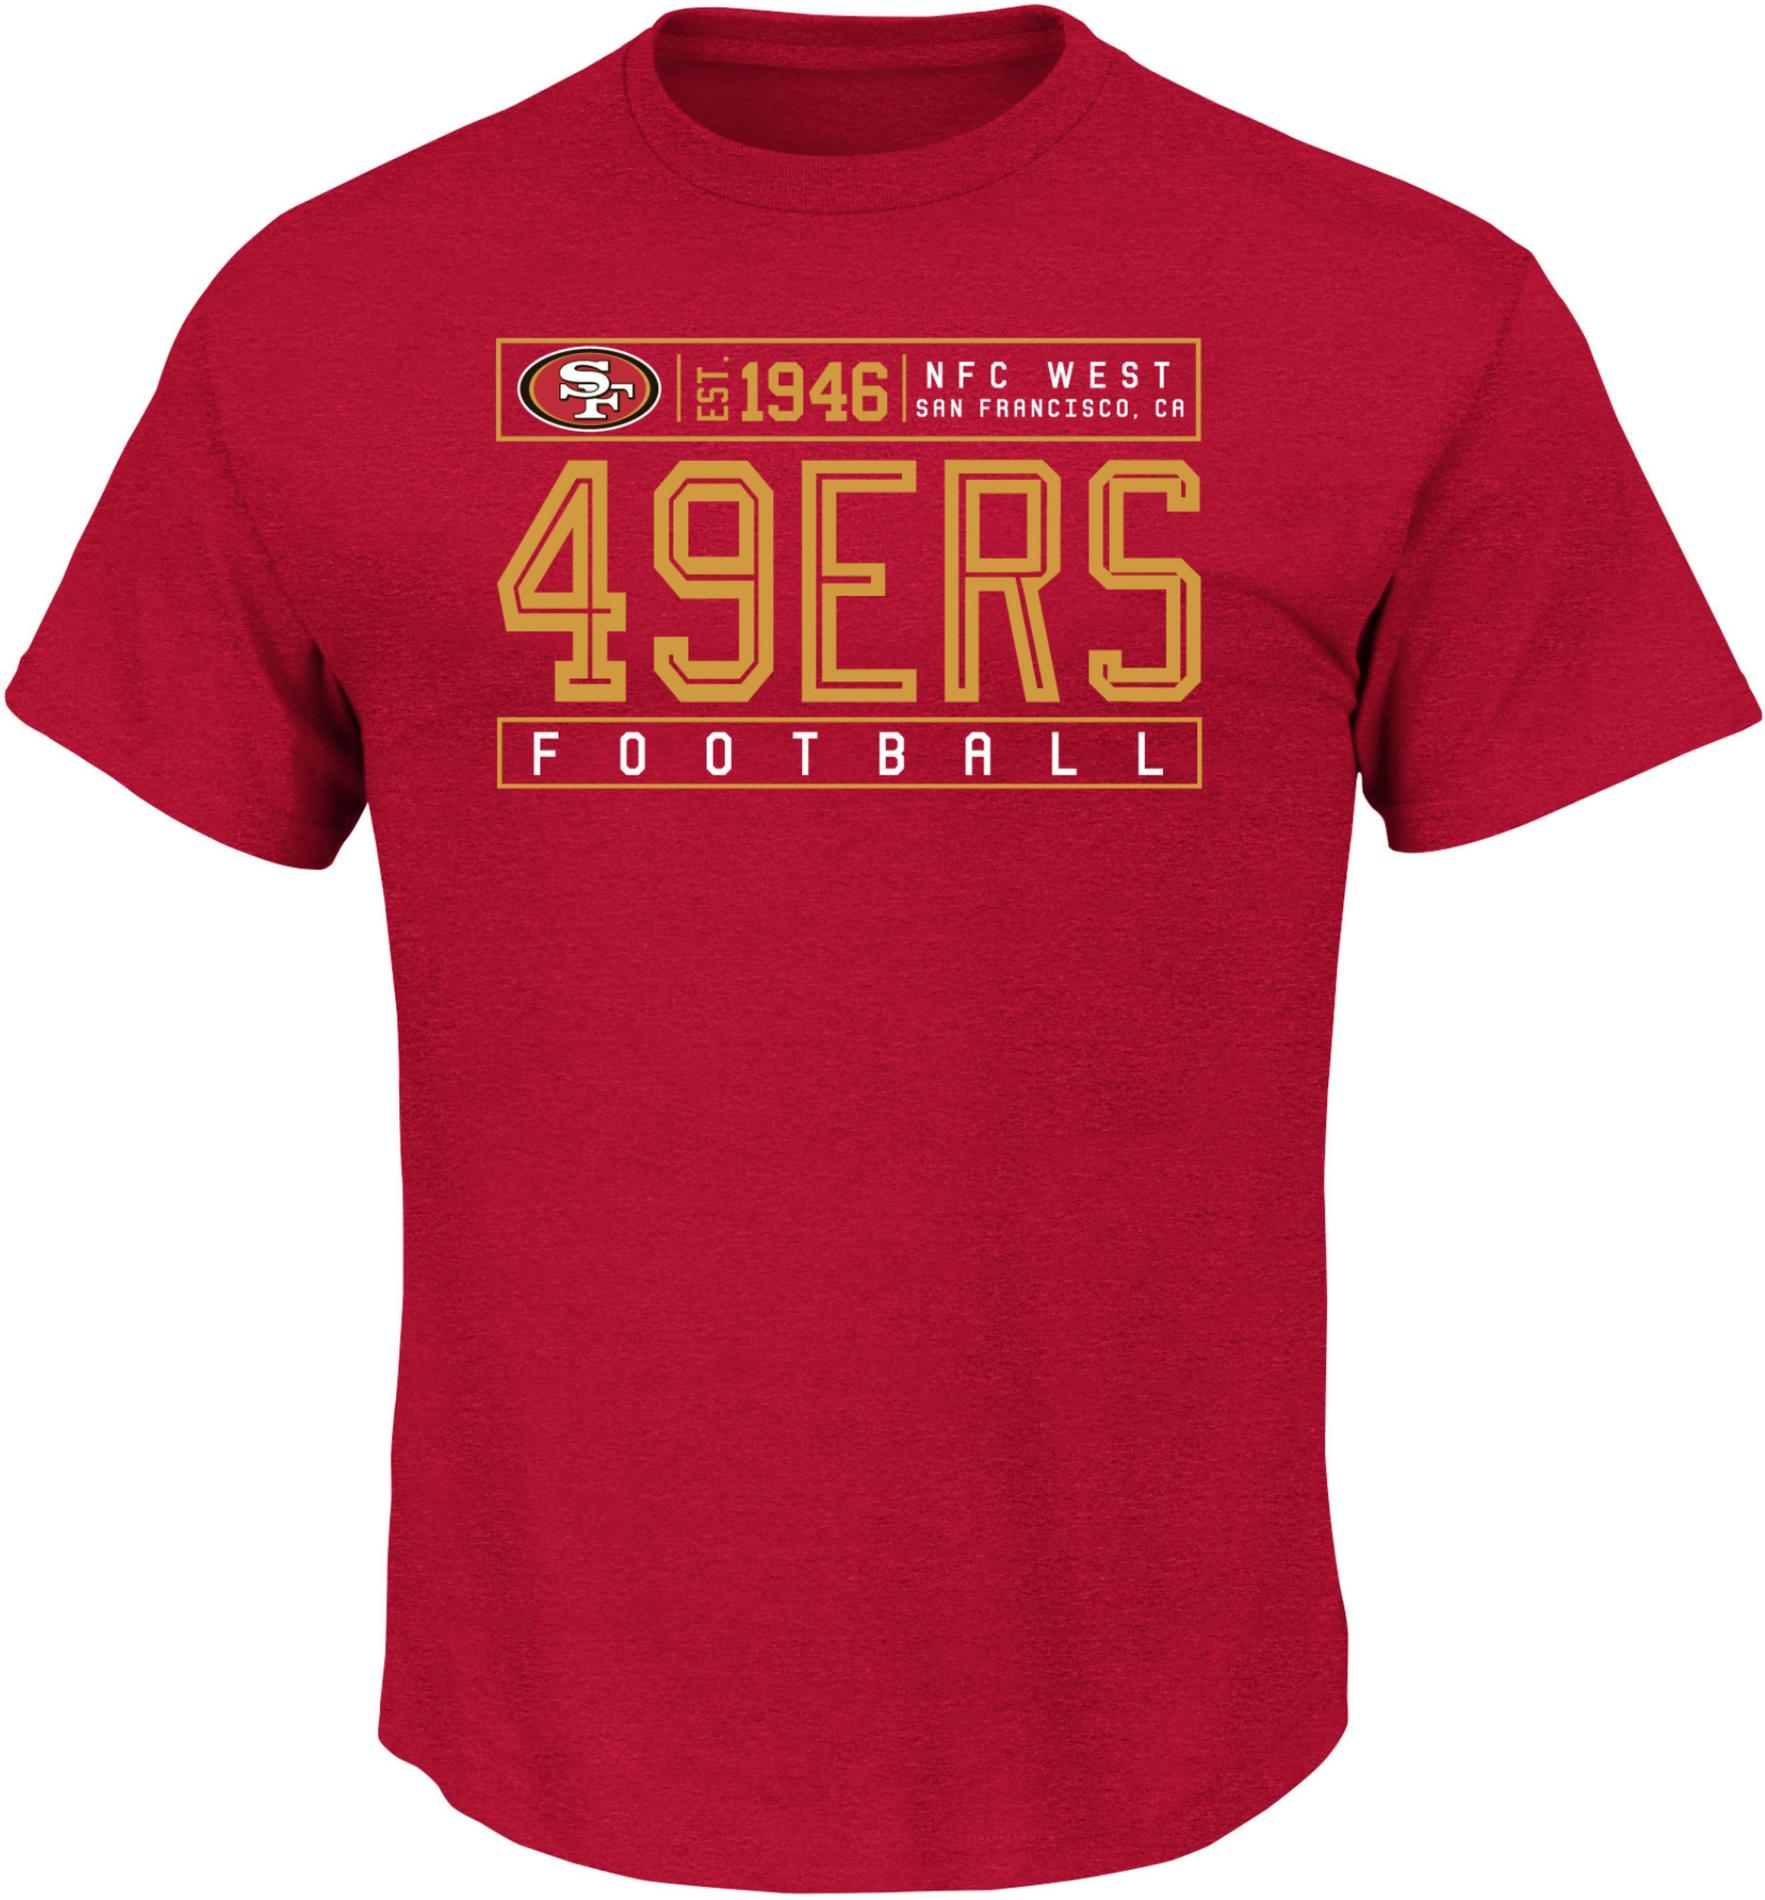 NFL Men's Short-Sleeve T-Shirt - San Francisco 49ers